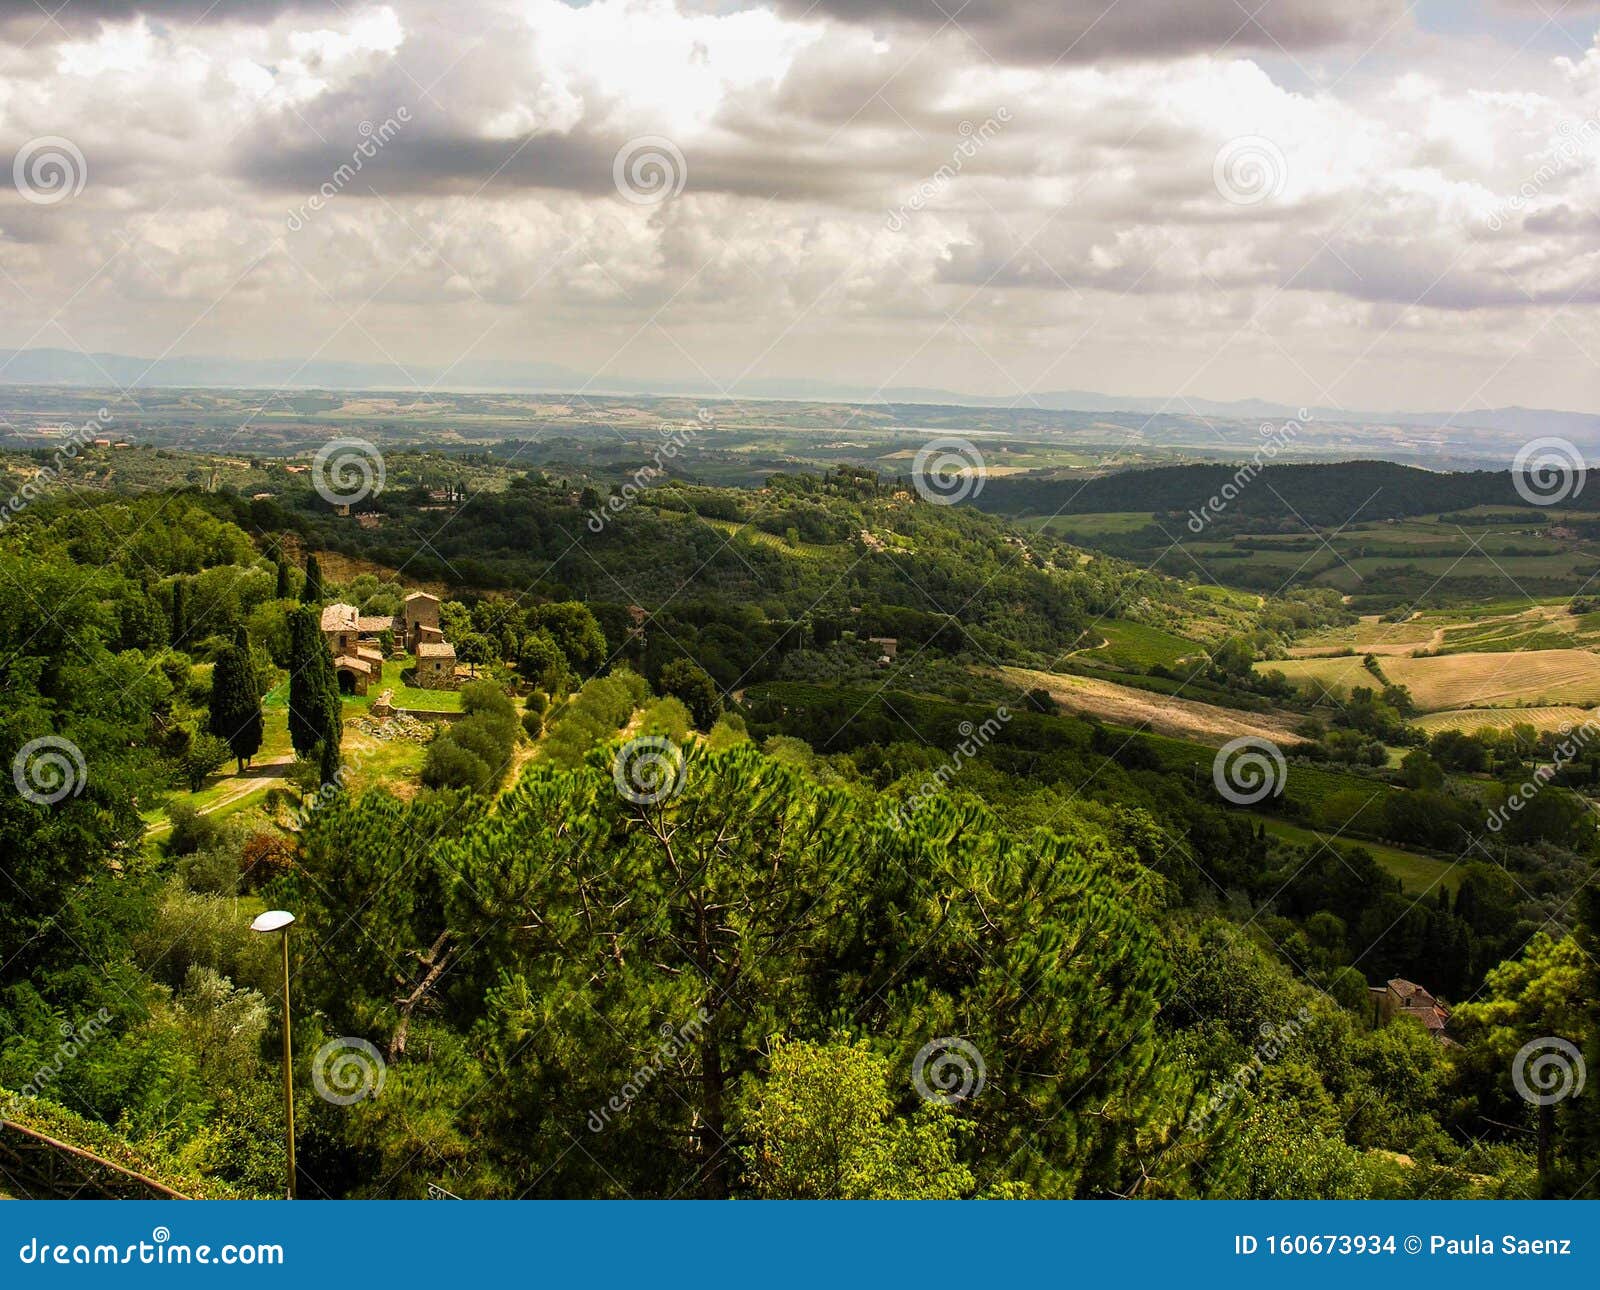 landscape of the tuscany, italy